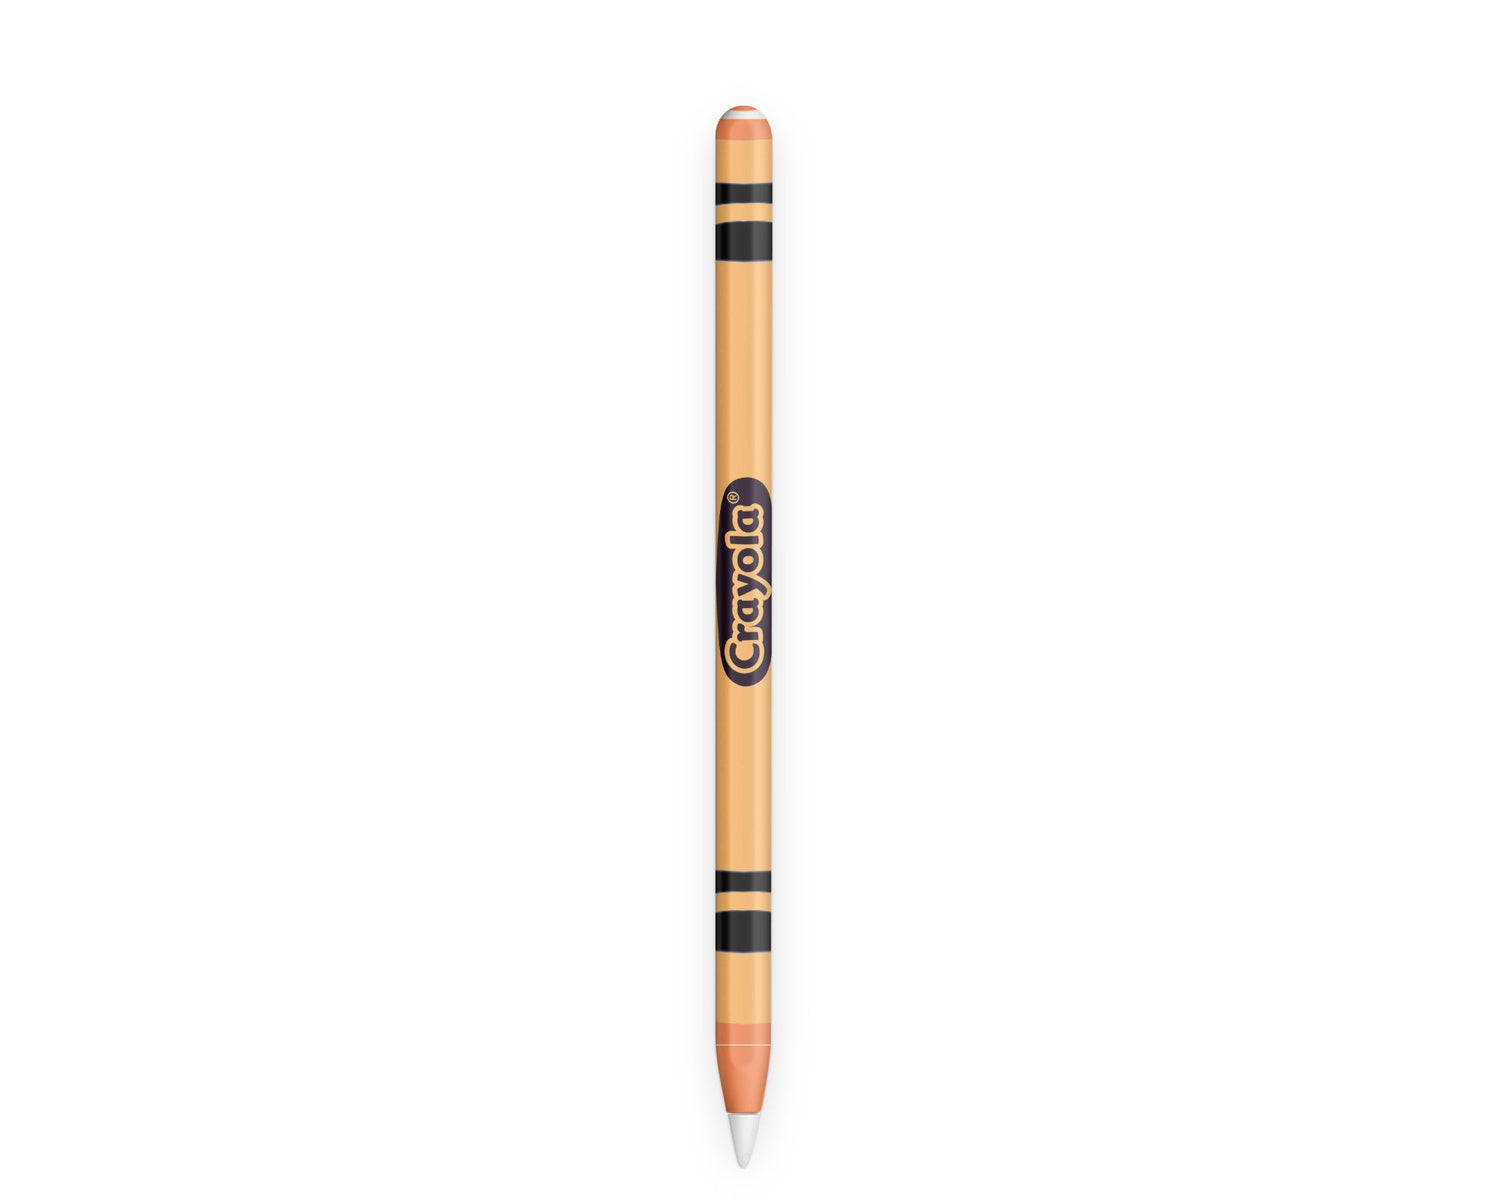 Lux Skins Apple Pencil Crayloa Orange 2nd Generation Skins - Art Crayola Series Skin